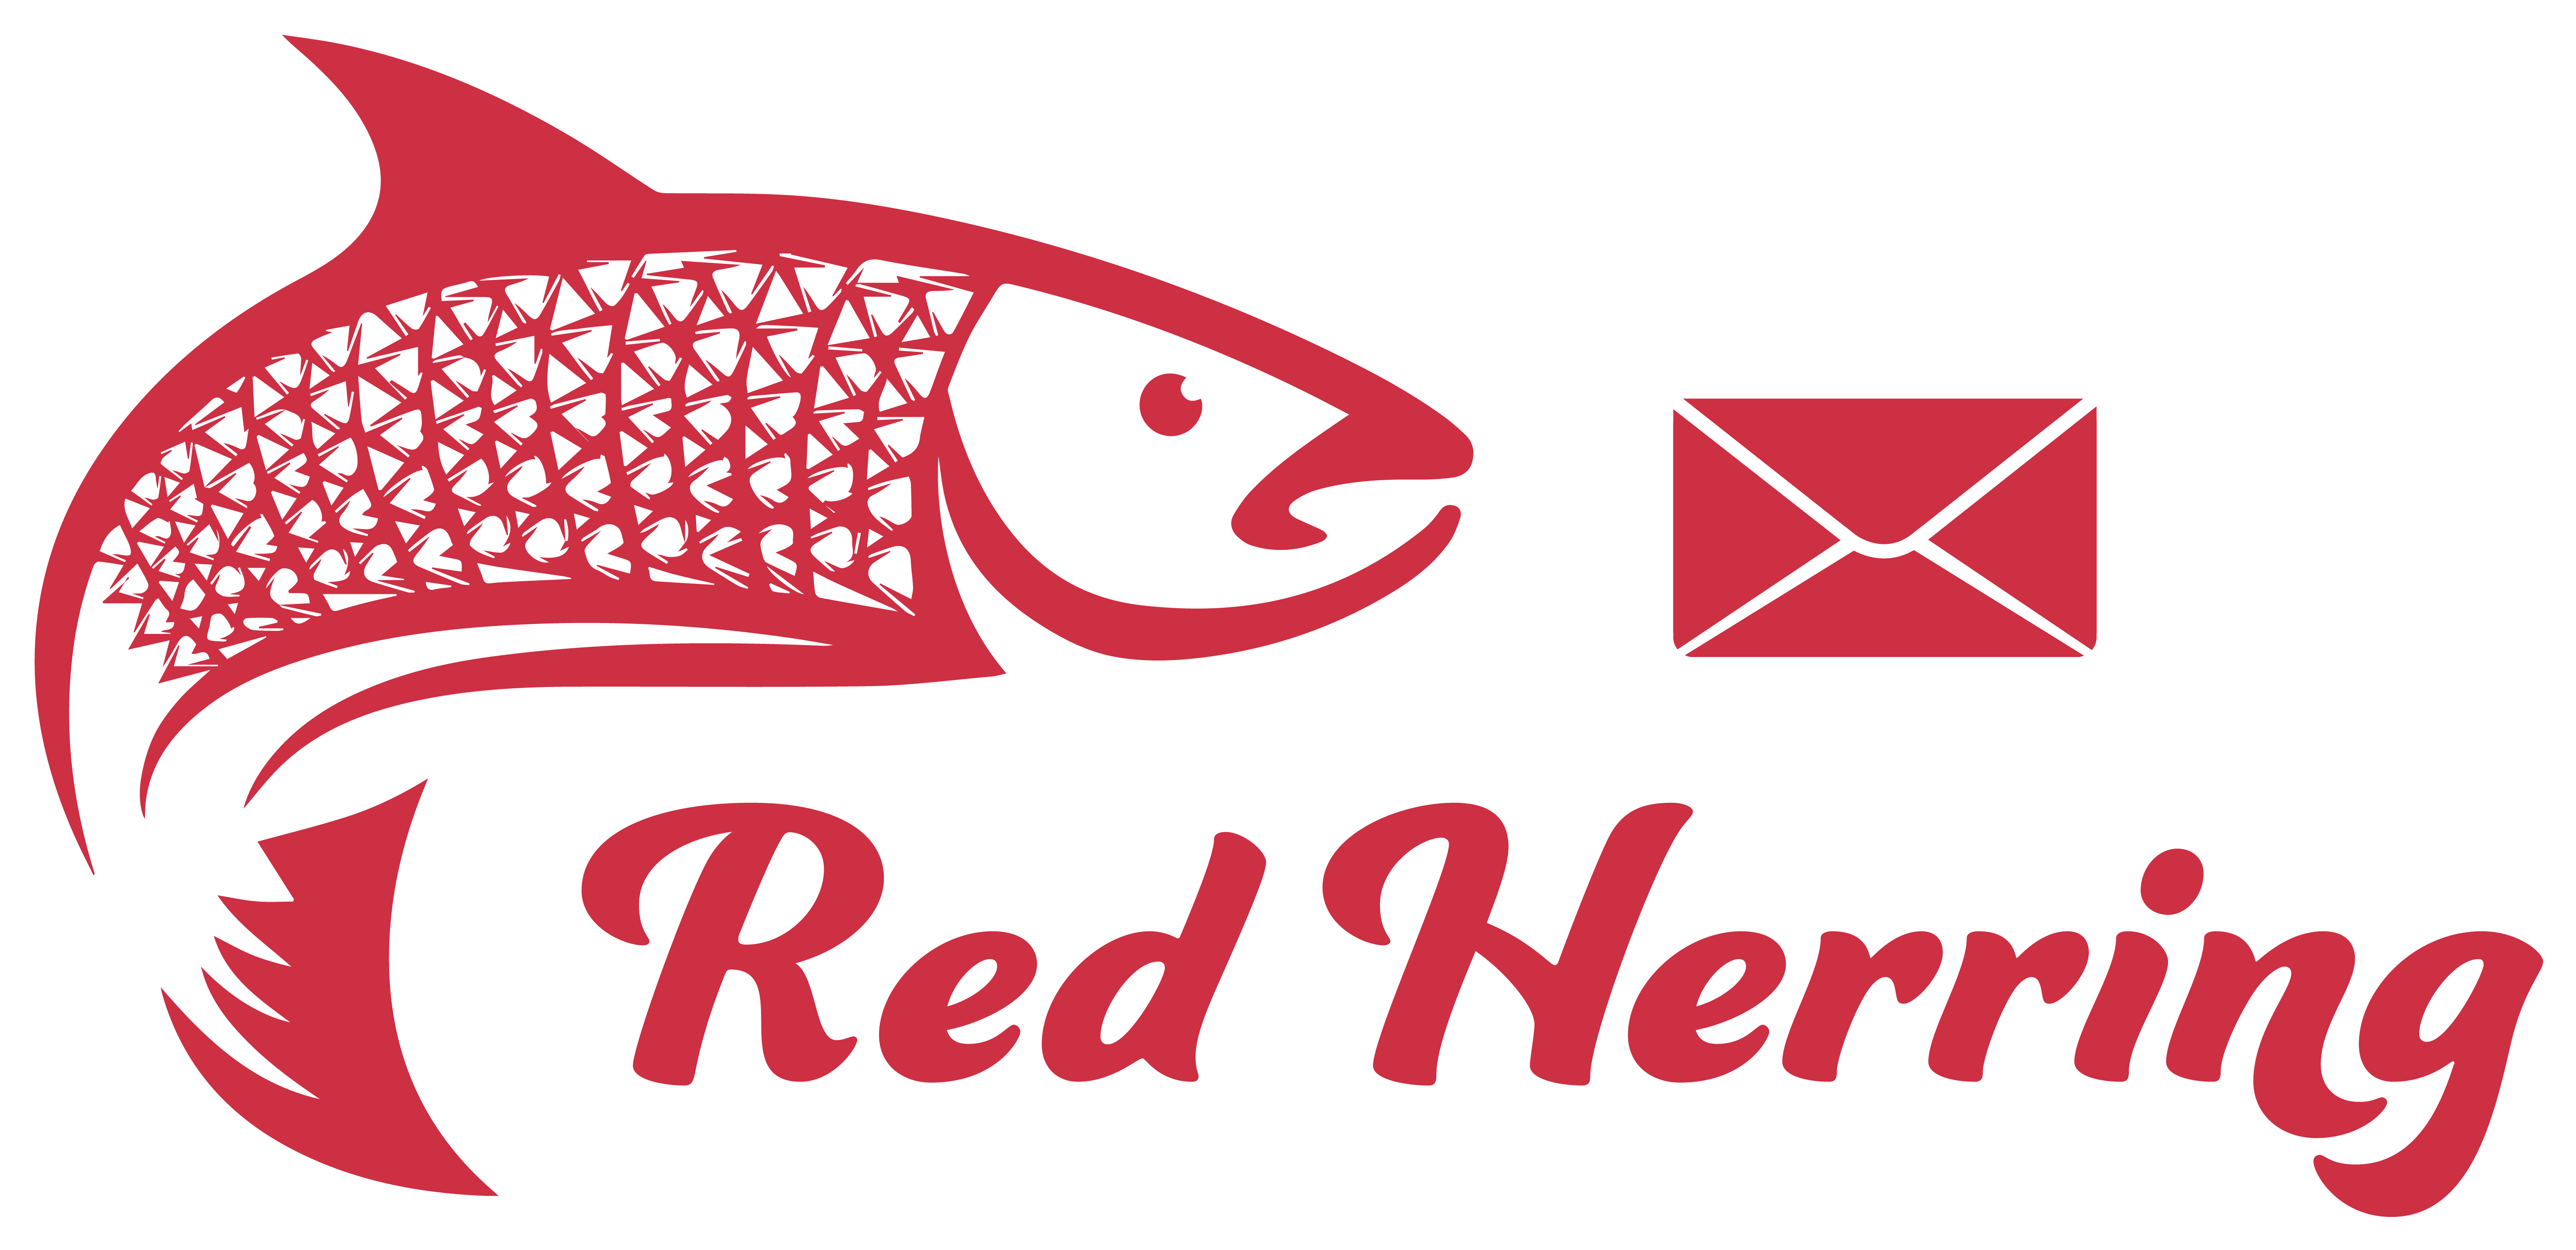 Red Herring Logo